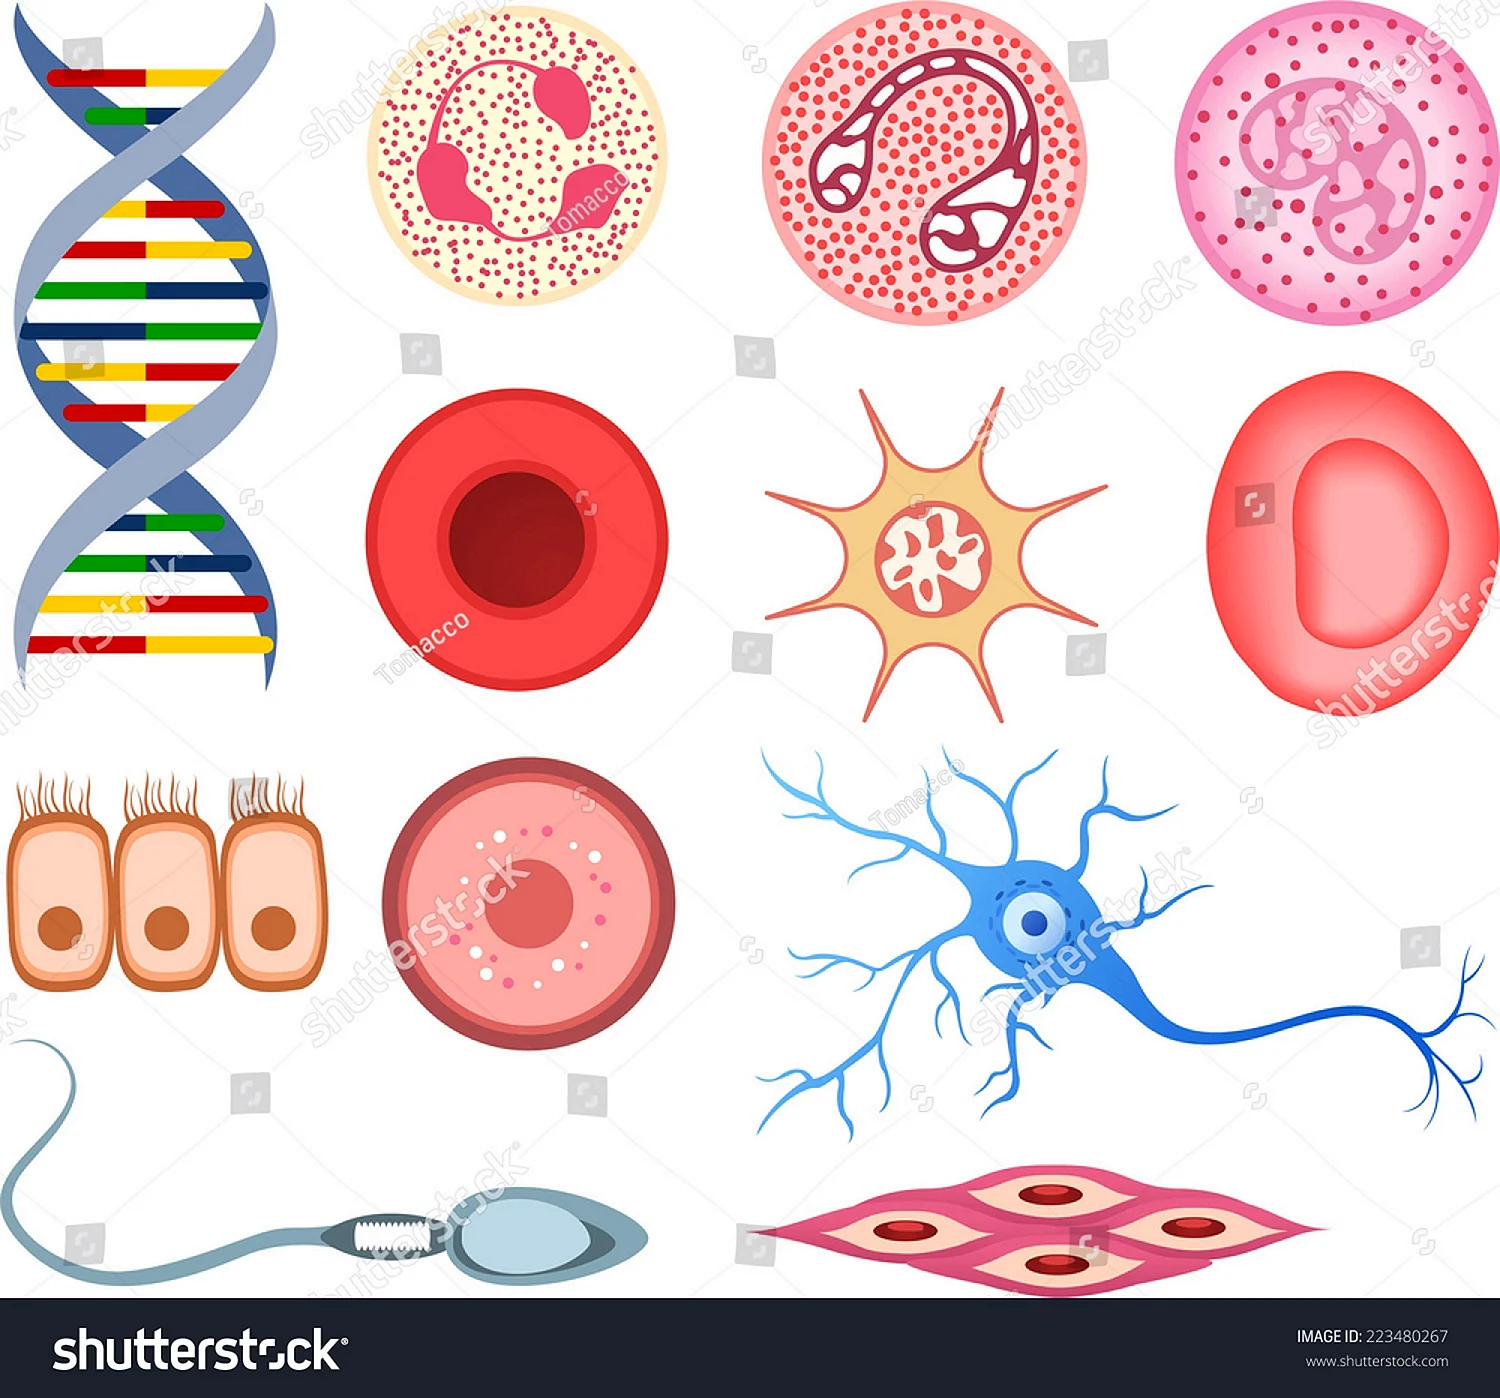 Формы клеток у человека